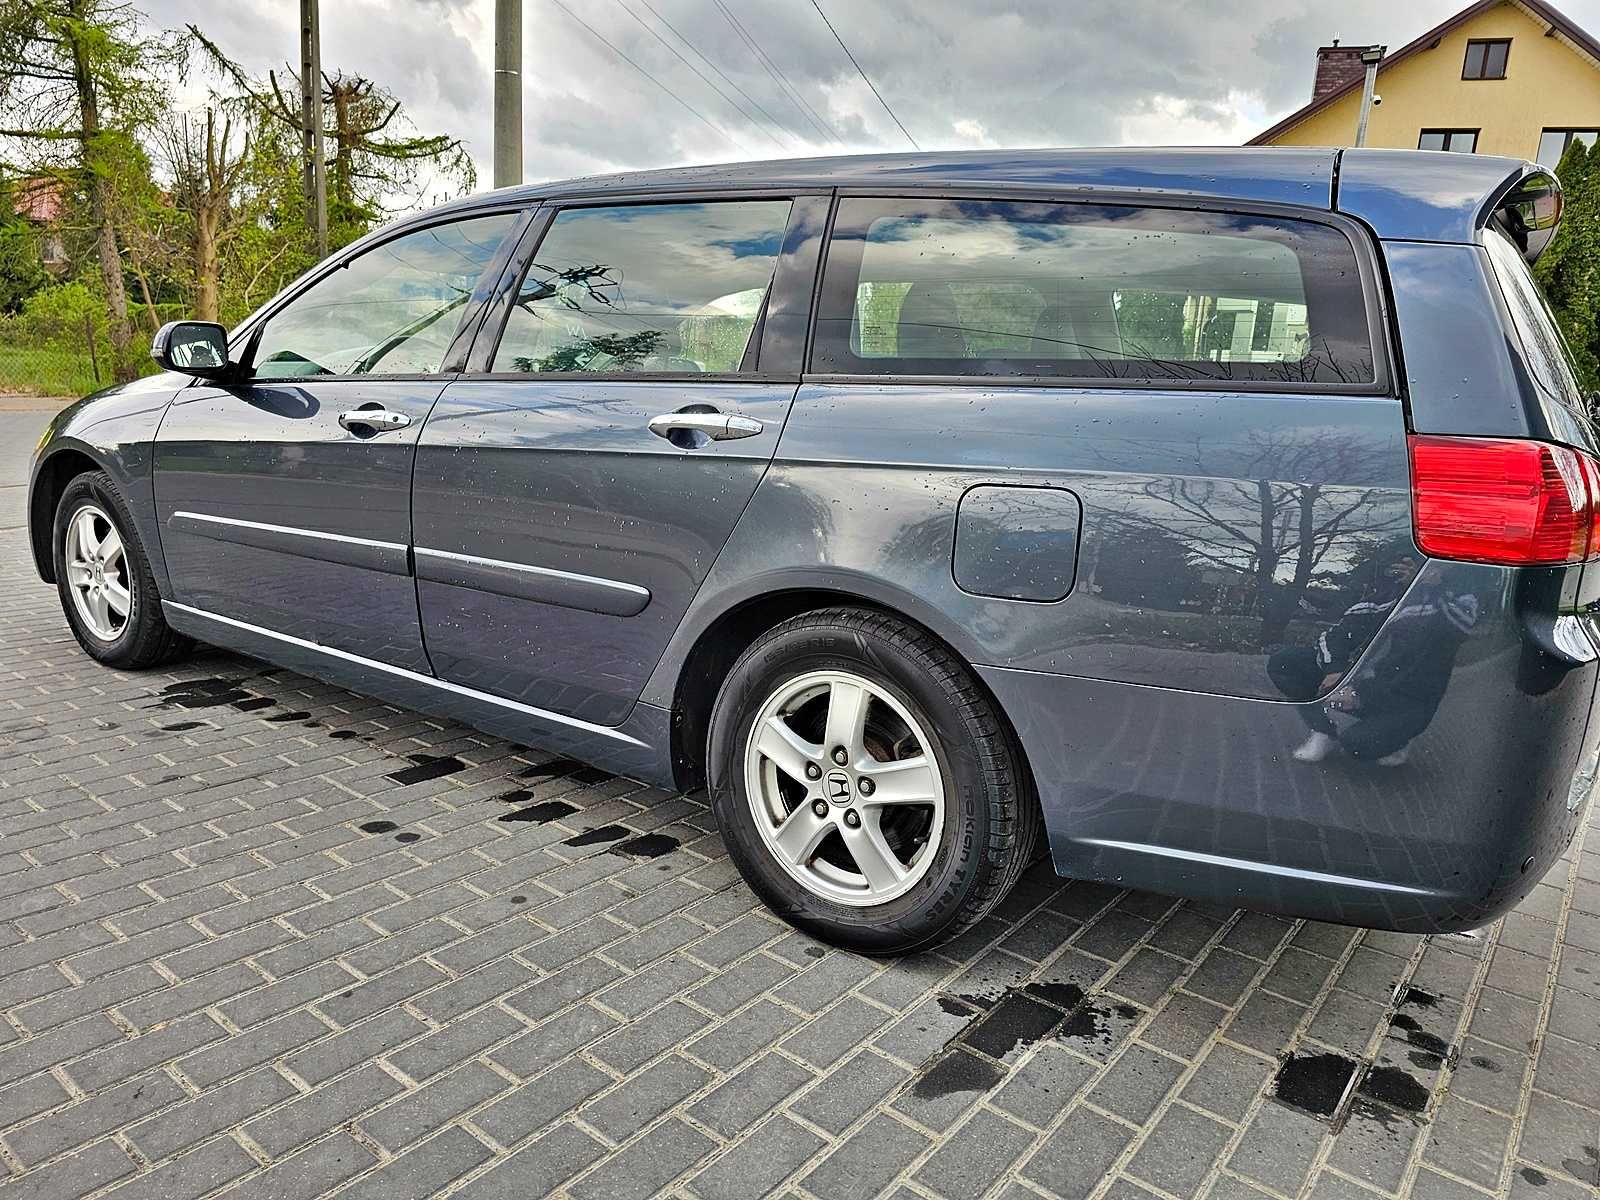 Honda Accord 2.0 B+G, SALON POLSKA, 2003r, Kombi, Właściciel 11 lat